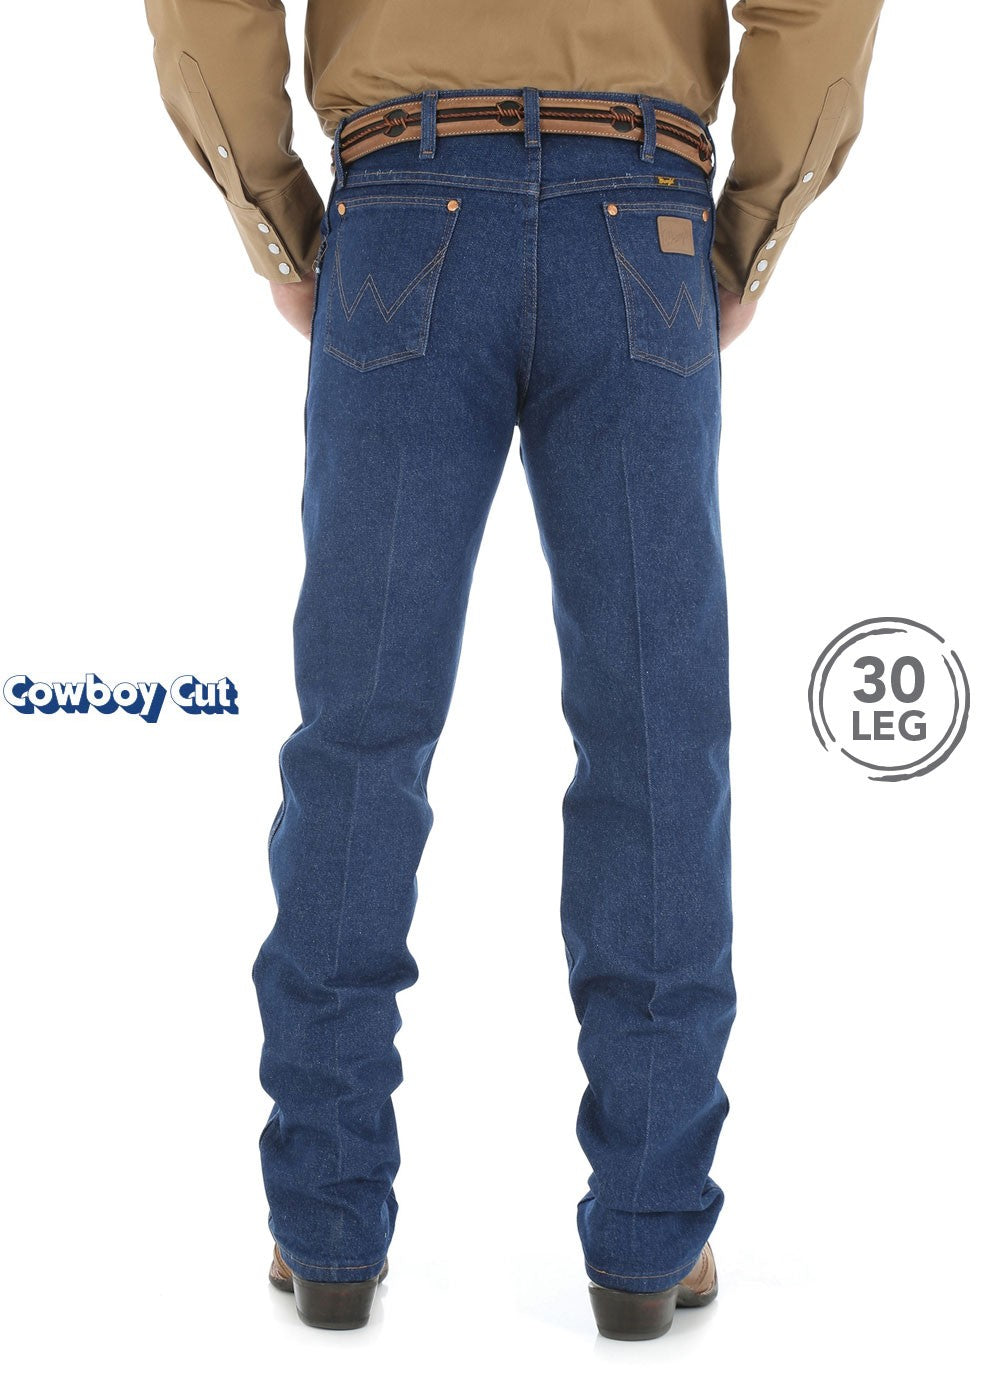 Wrangler Men's Cowboy Cut Original Fit Pre-Washed Denim Jeans